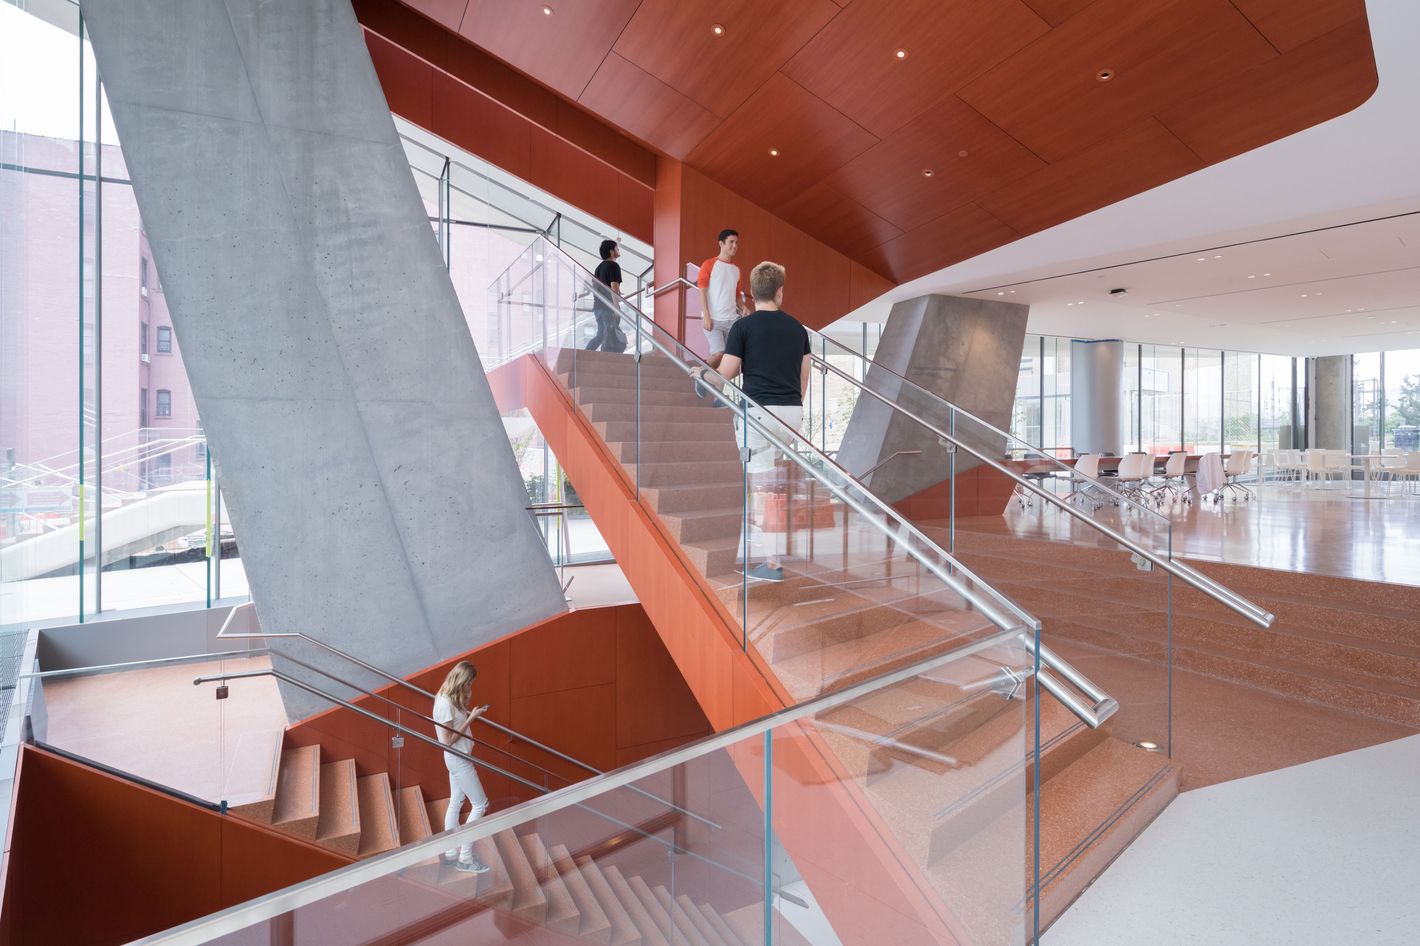 Diller, Scofidio + Renfro Unveils New Columbia University Medical Building